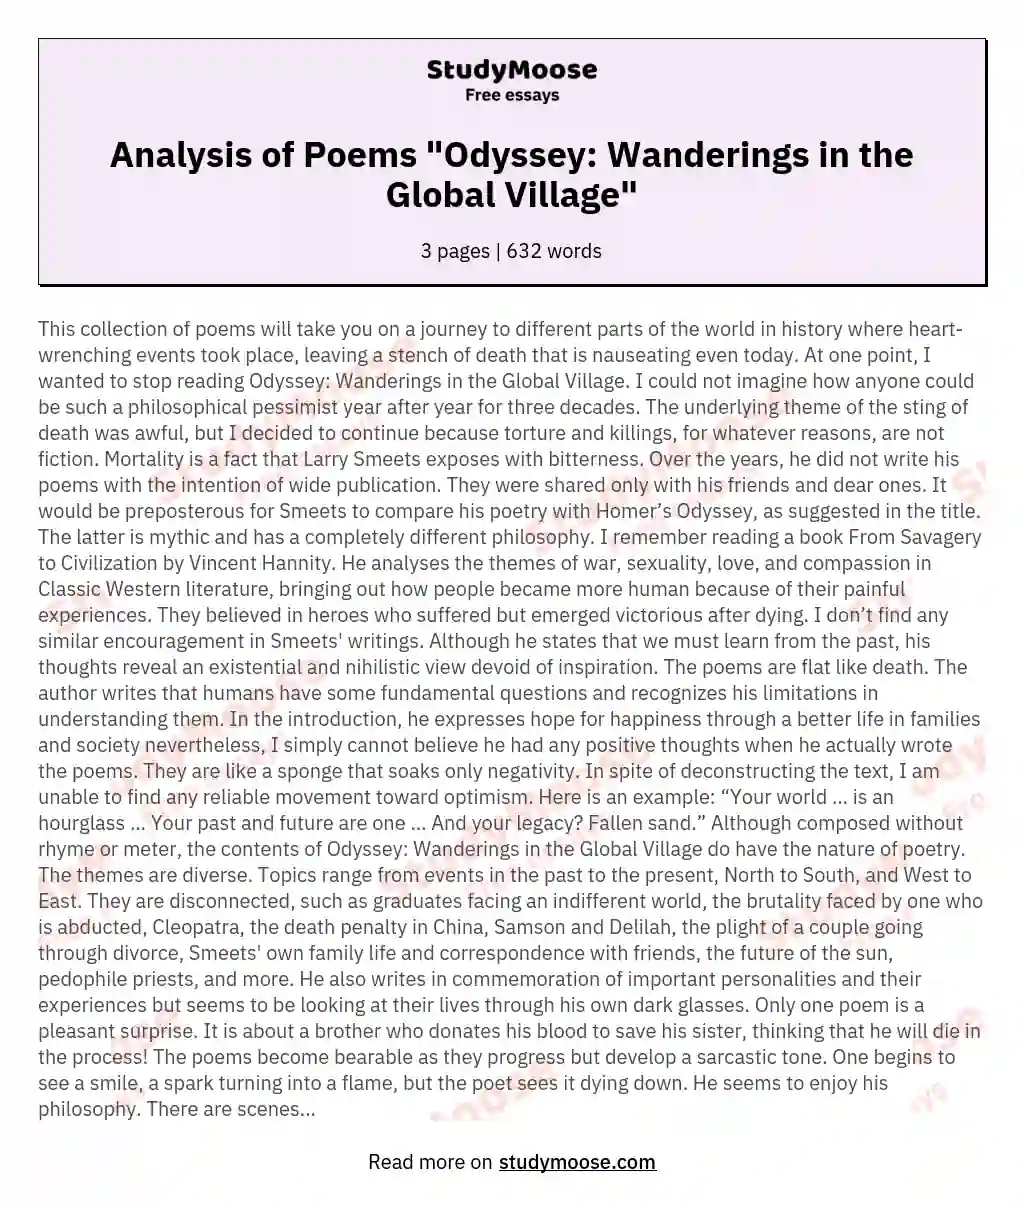 Analysis of Poems "Odyssey: Wanderings in the Global Village" essay